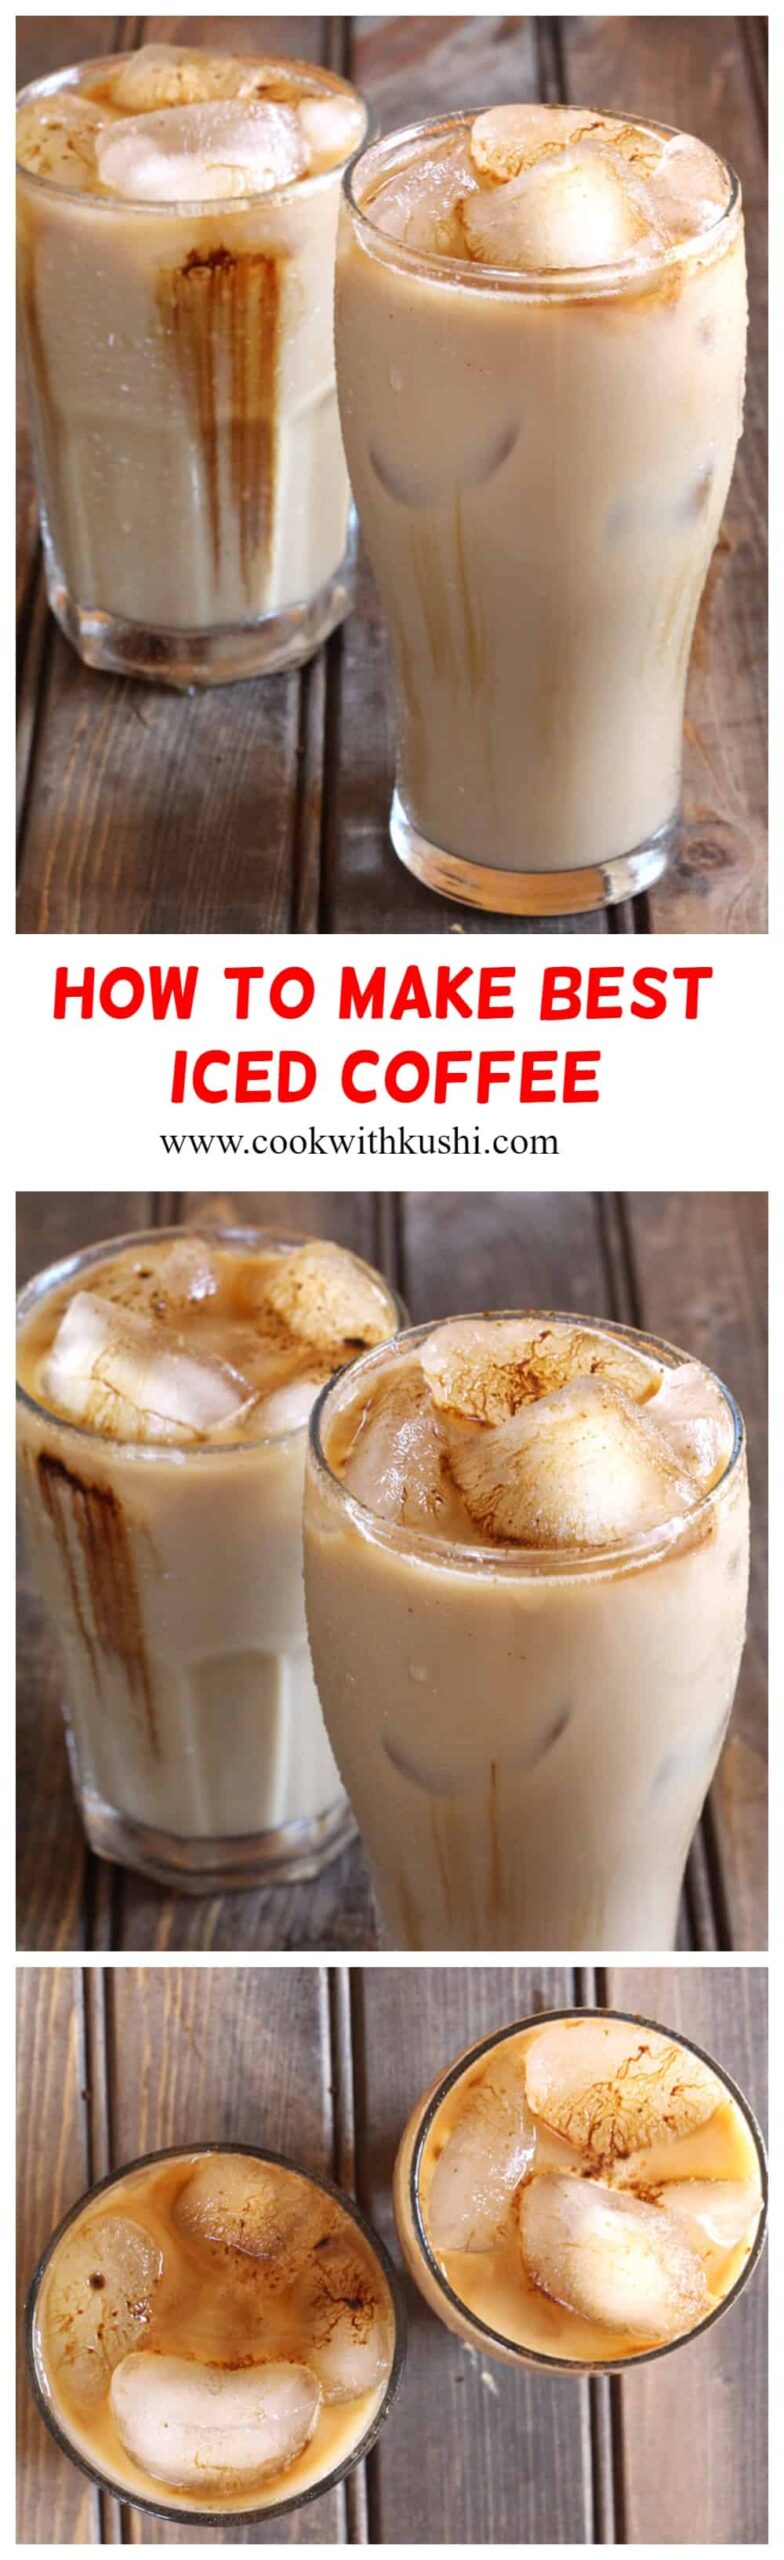 How to make best iced coffee #icedcoffee #thaicoffee